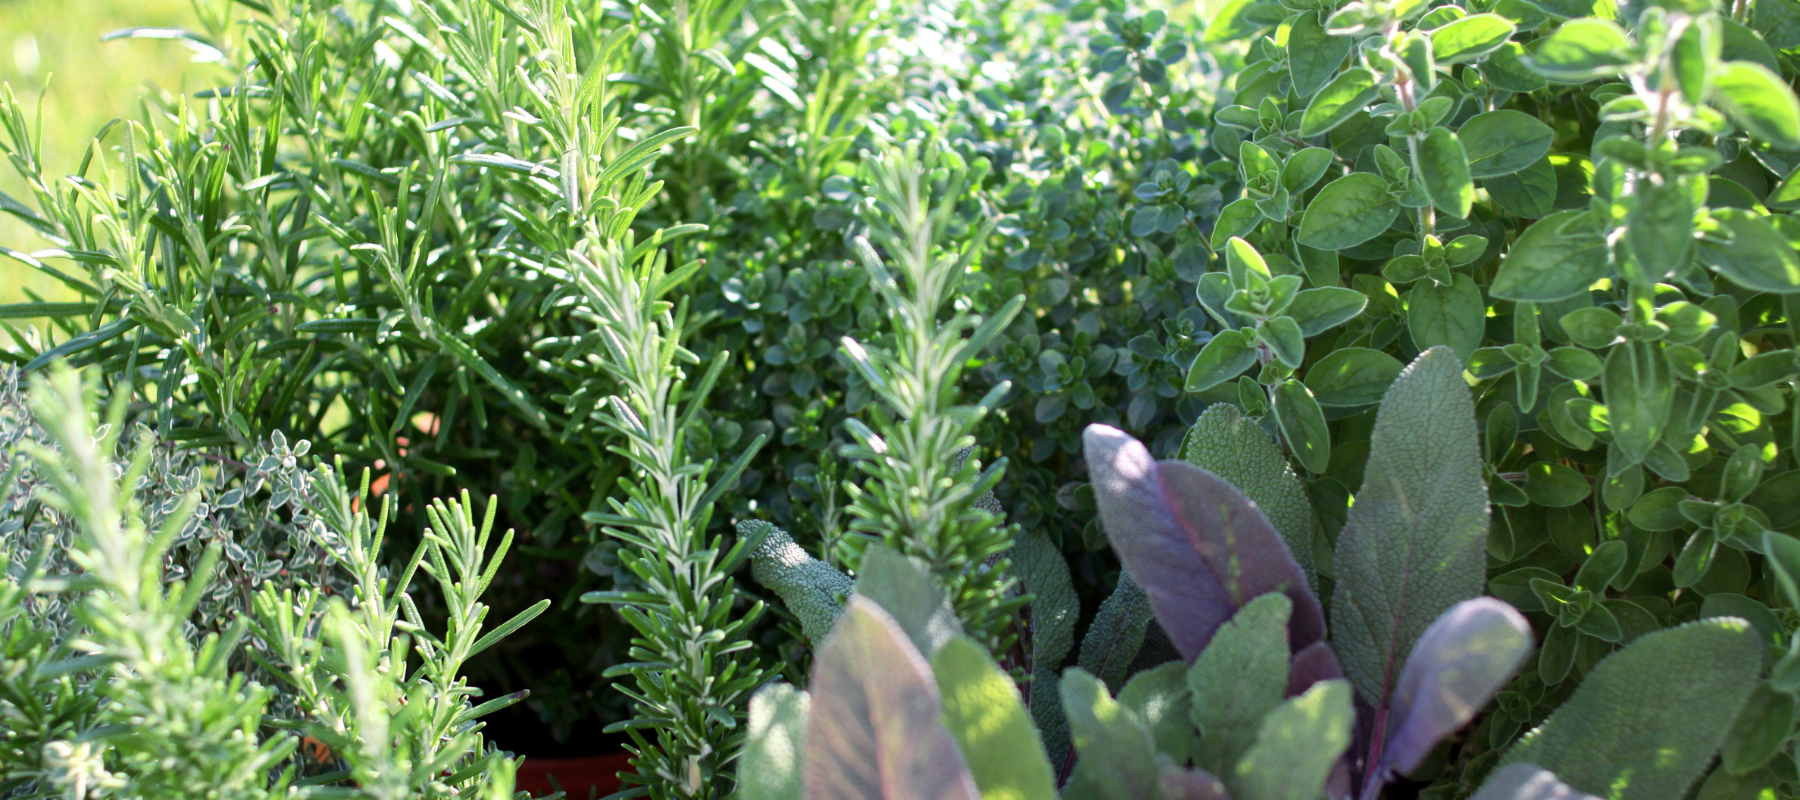 Grow your own Herb Garden